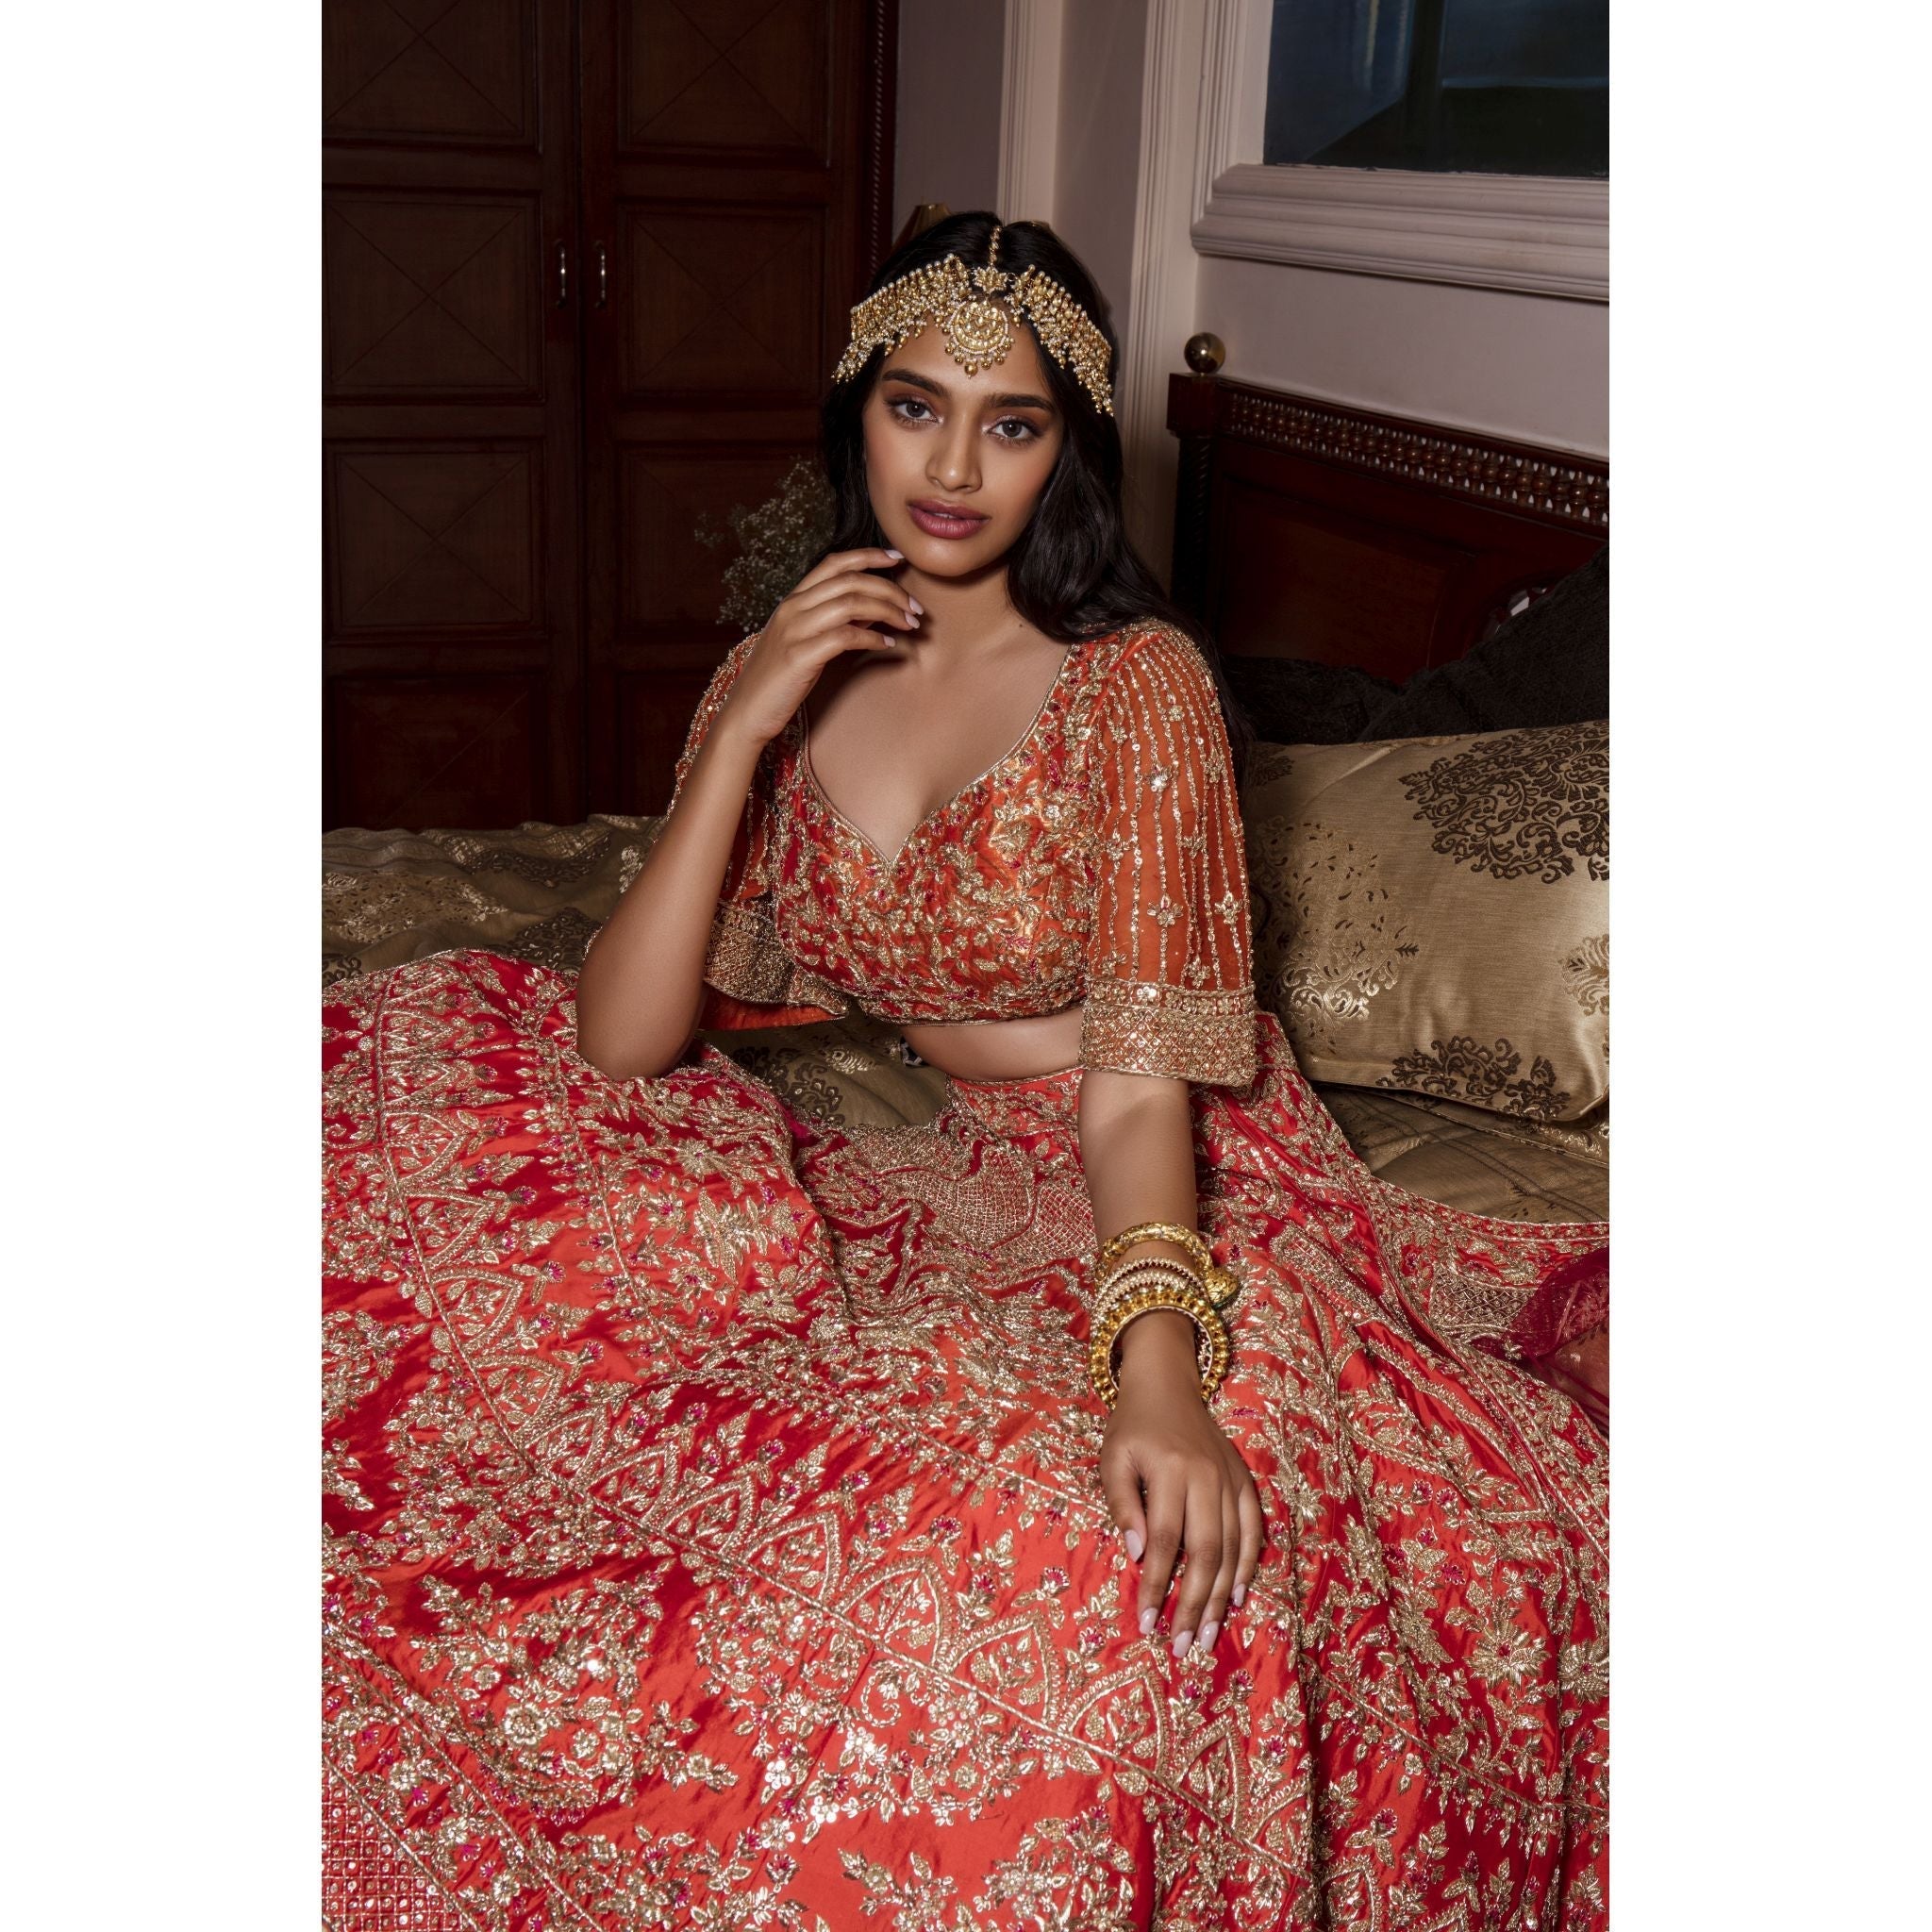 Vermillion Orange Intricate Mughal Embroidered Lehenga Set - Indian Designer Bridal Wedding Outfit